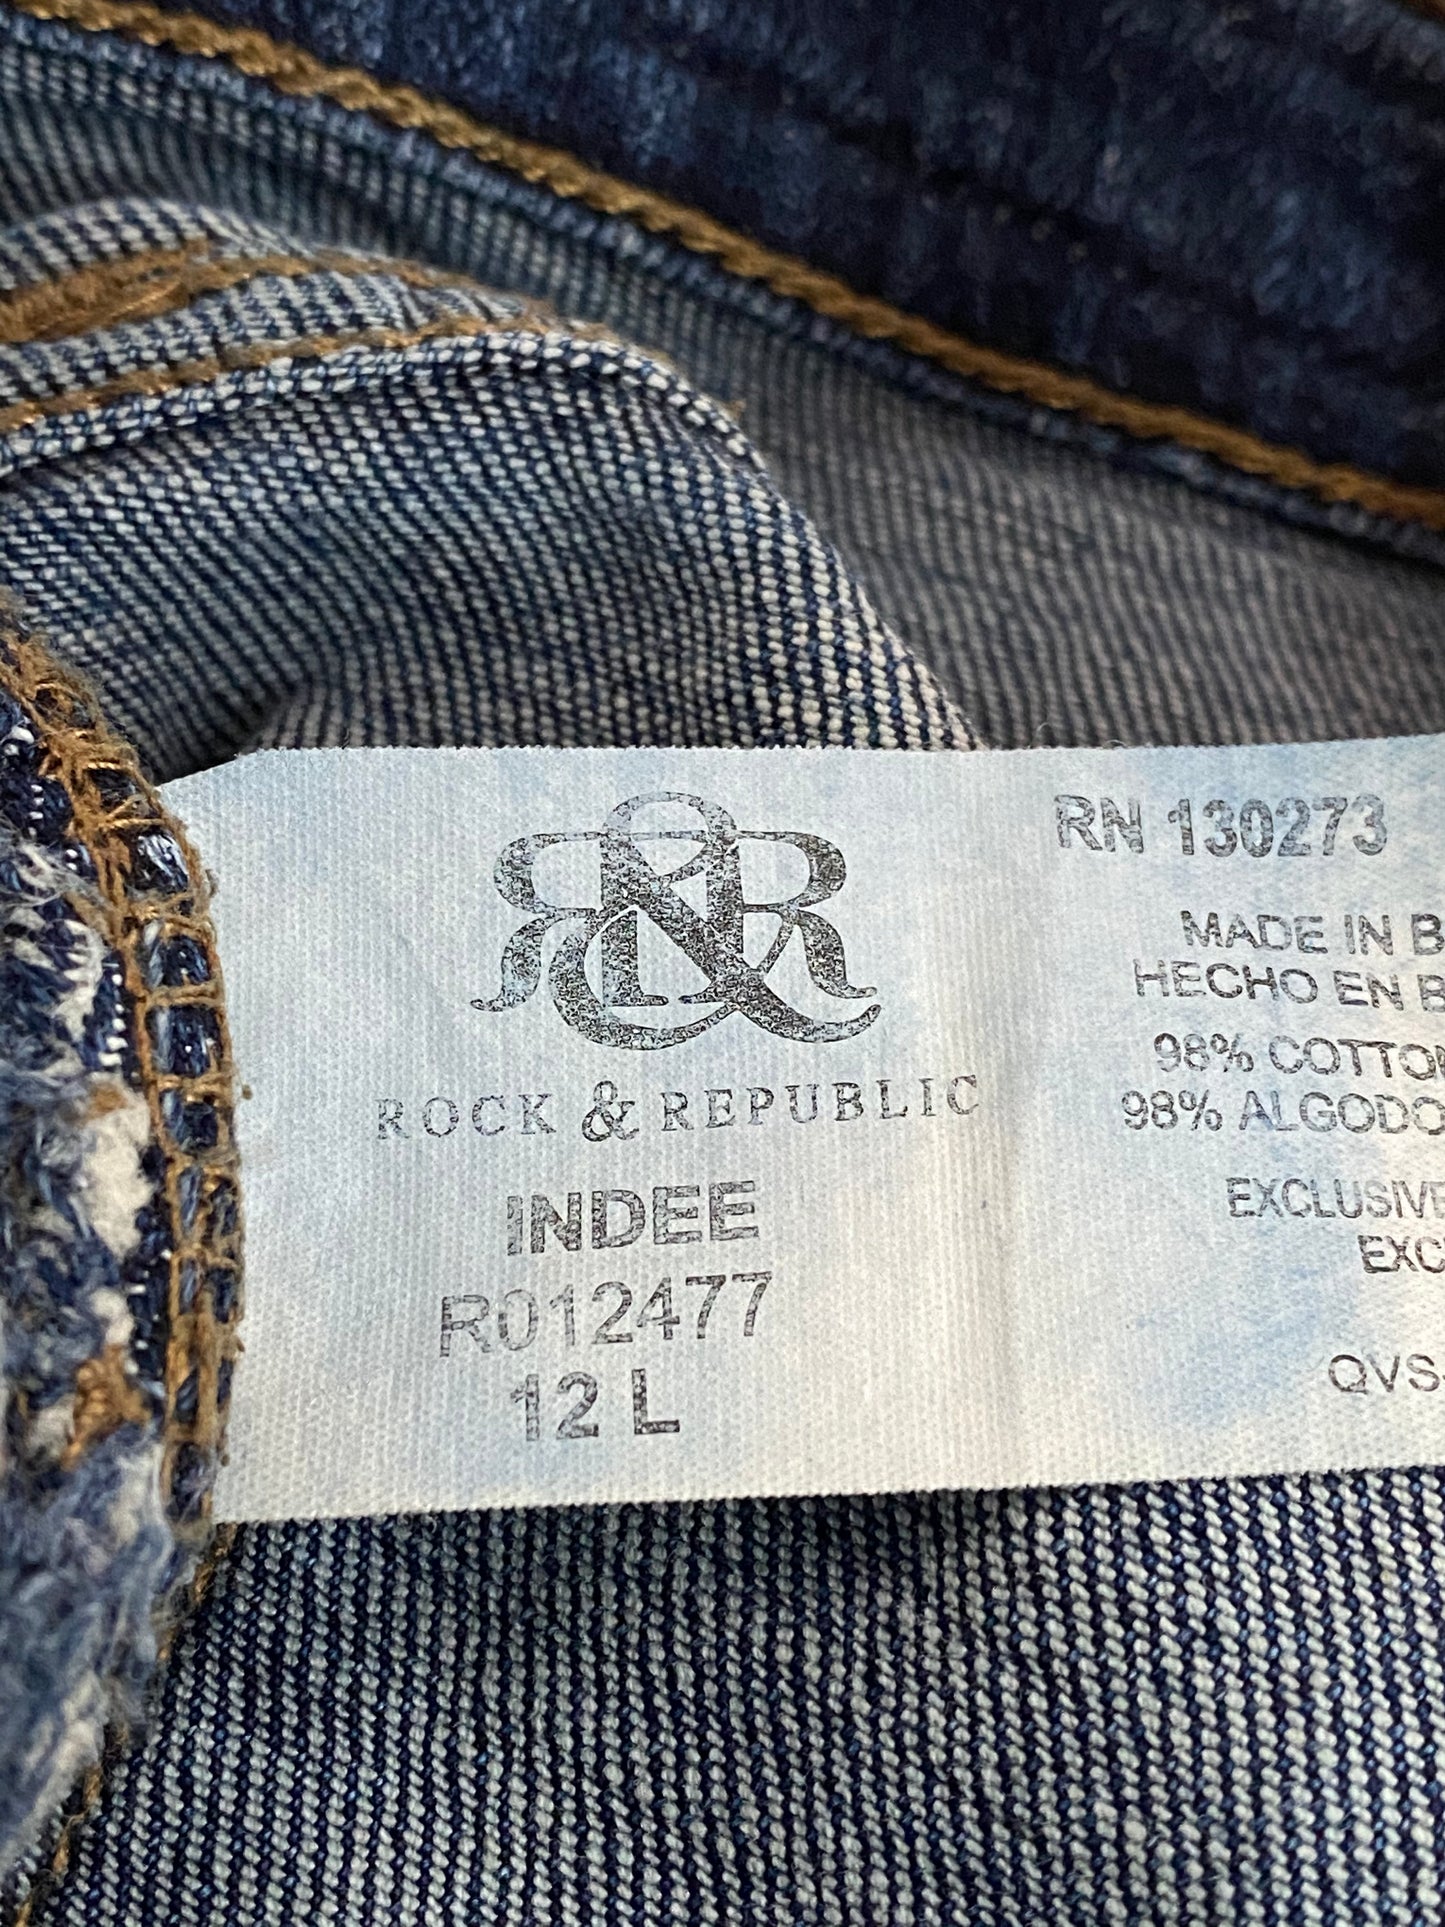 Rock & Republic Distressed Denim Jeans